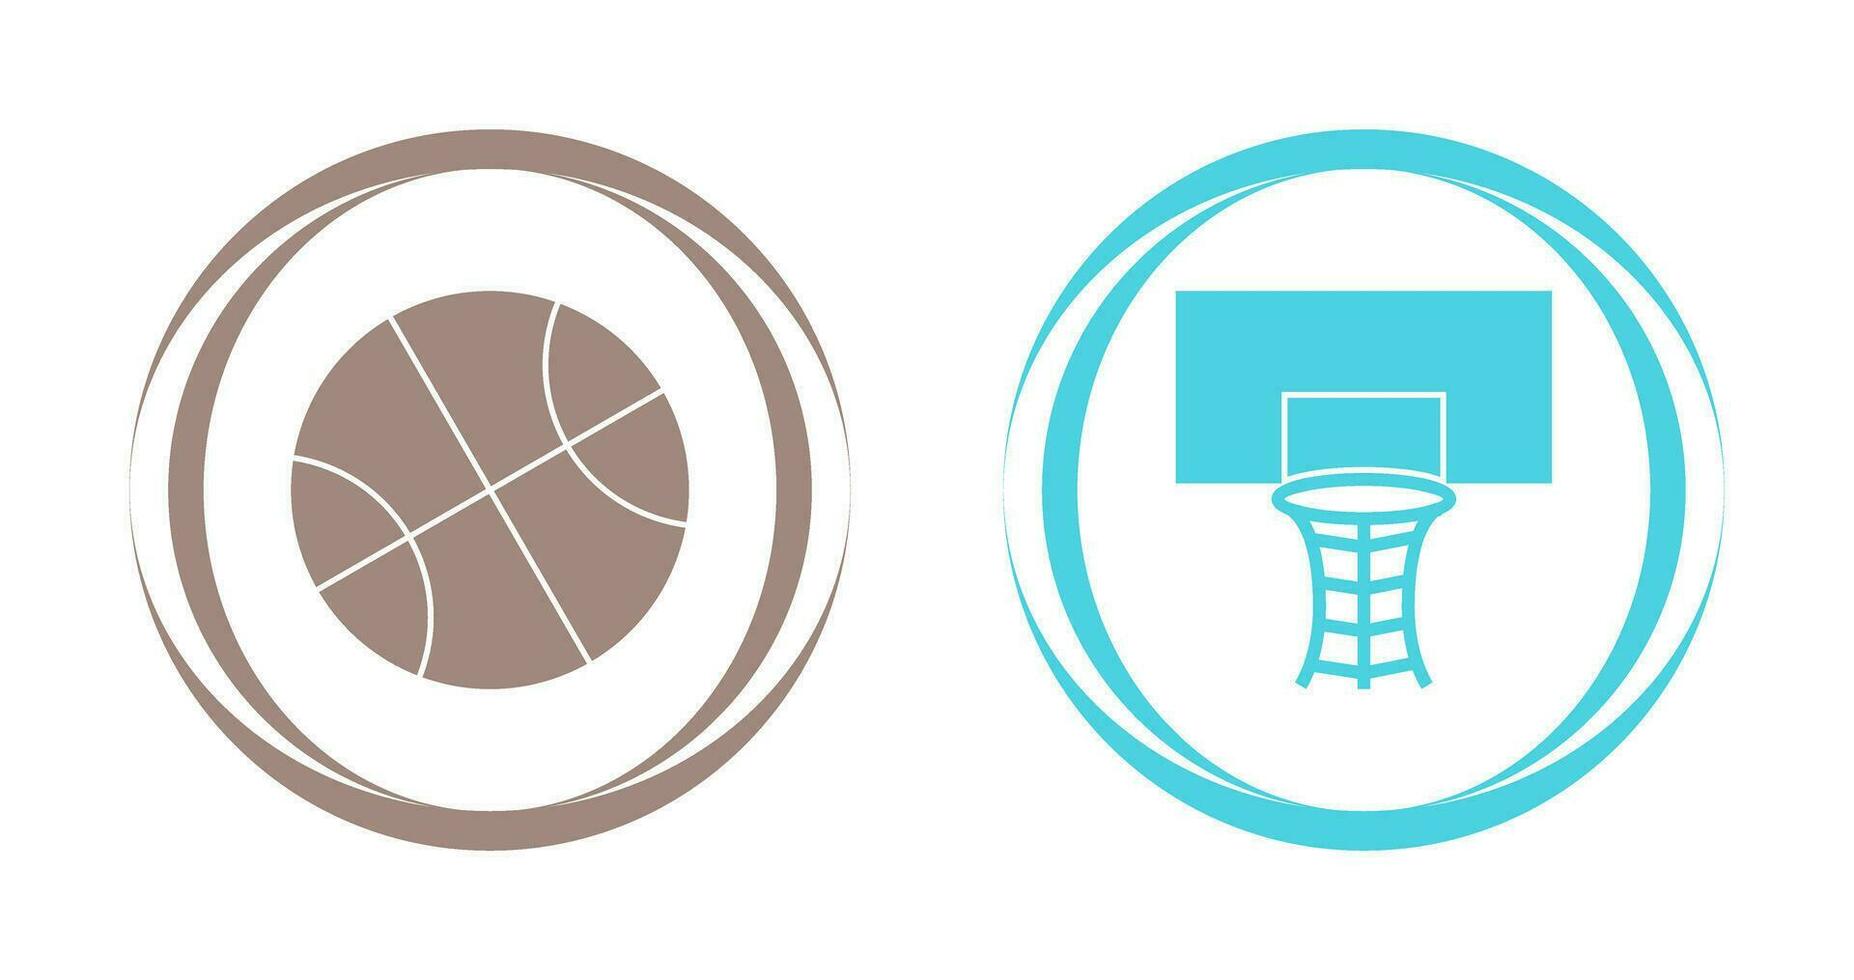 icono de vector de aro de baloncesto